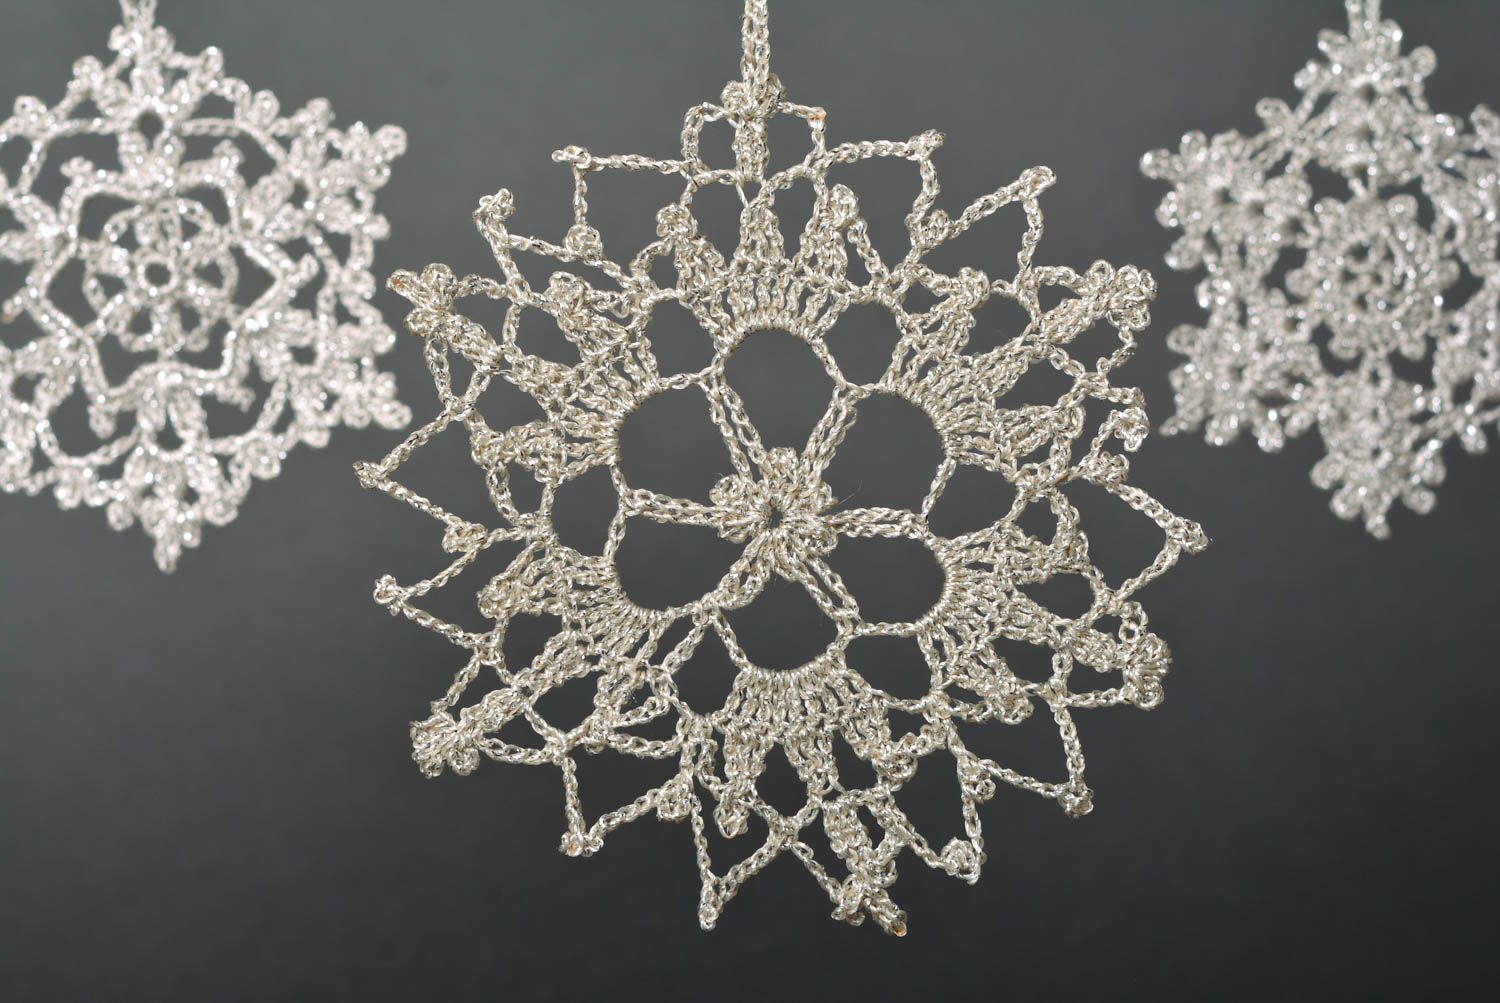 Handmade crocheted snowflake Christmas tree decor interior decor ideas photo 1